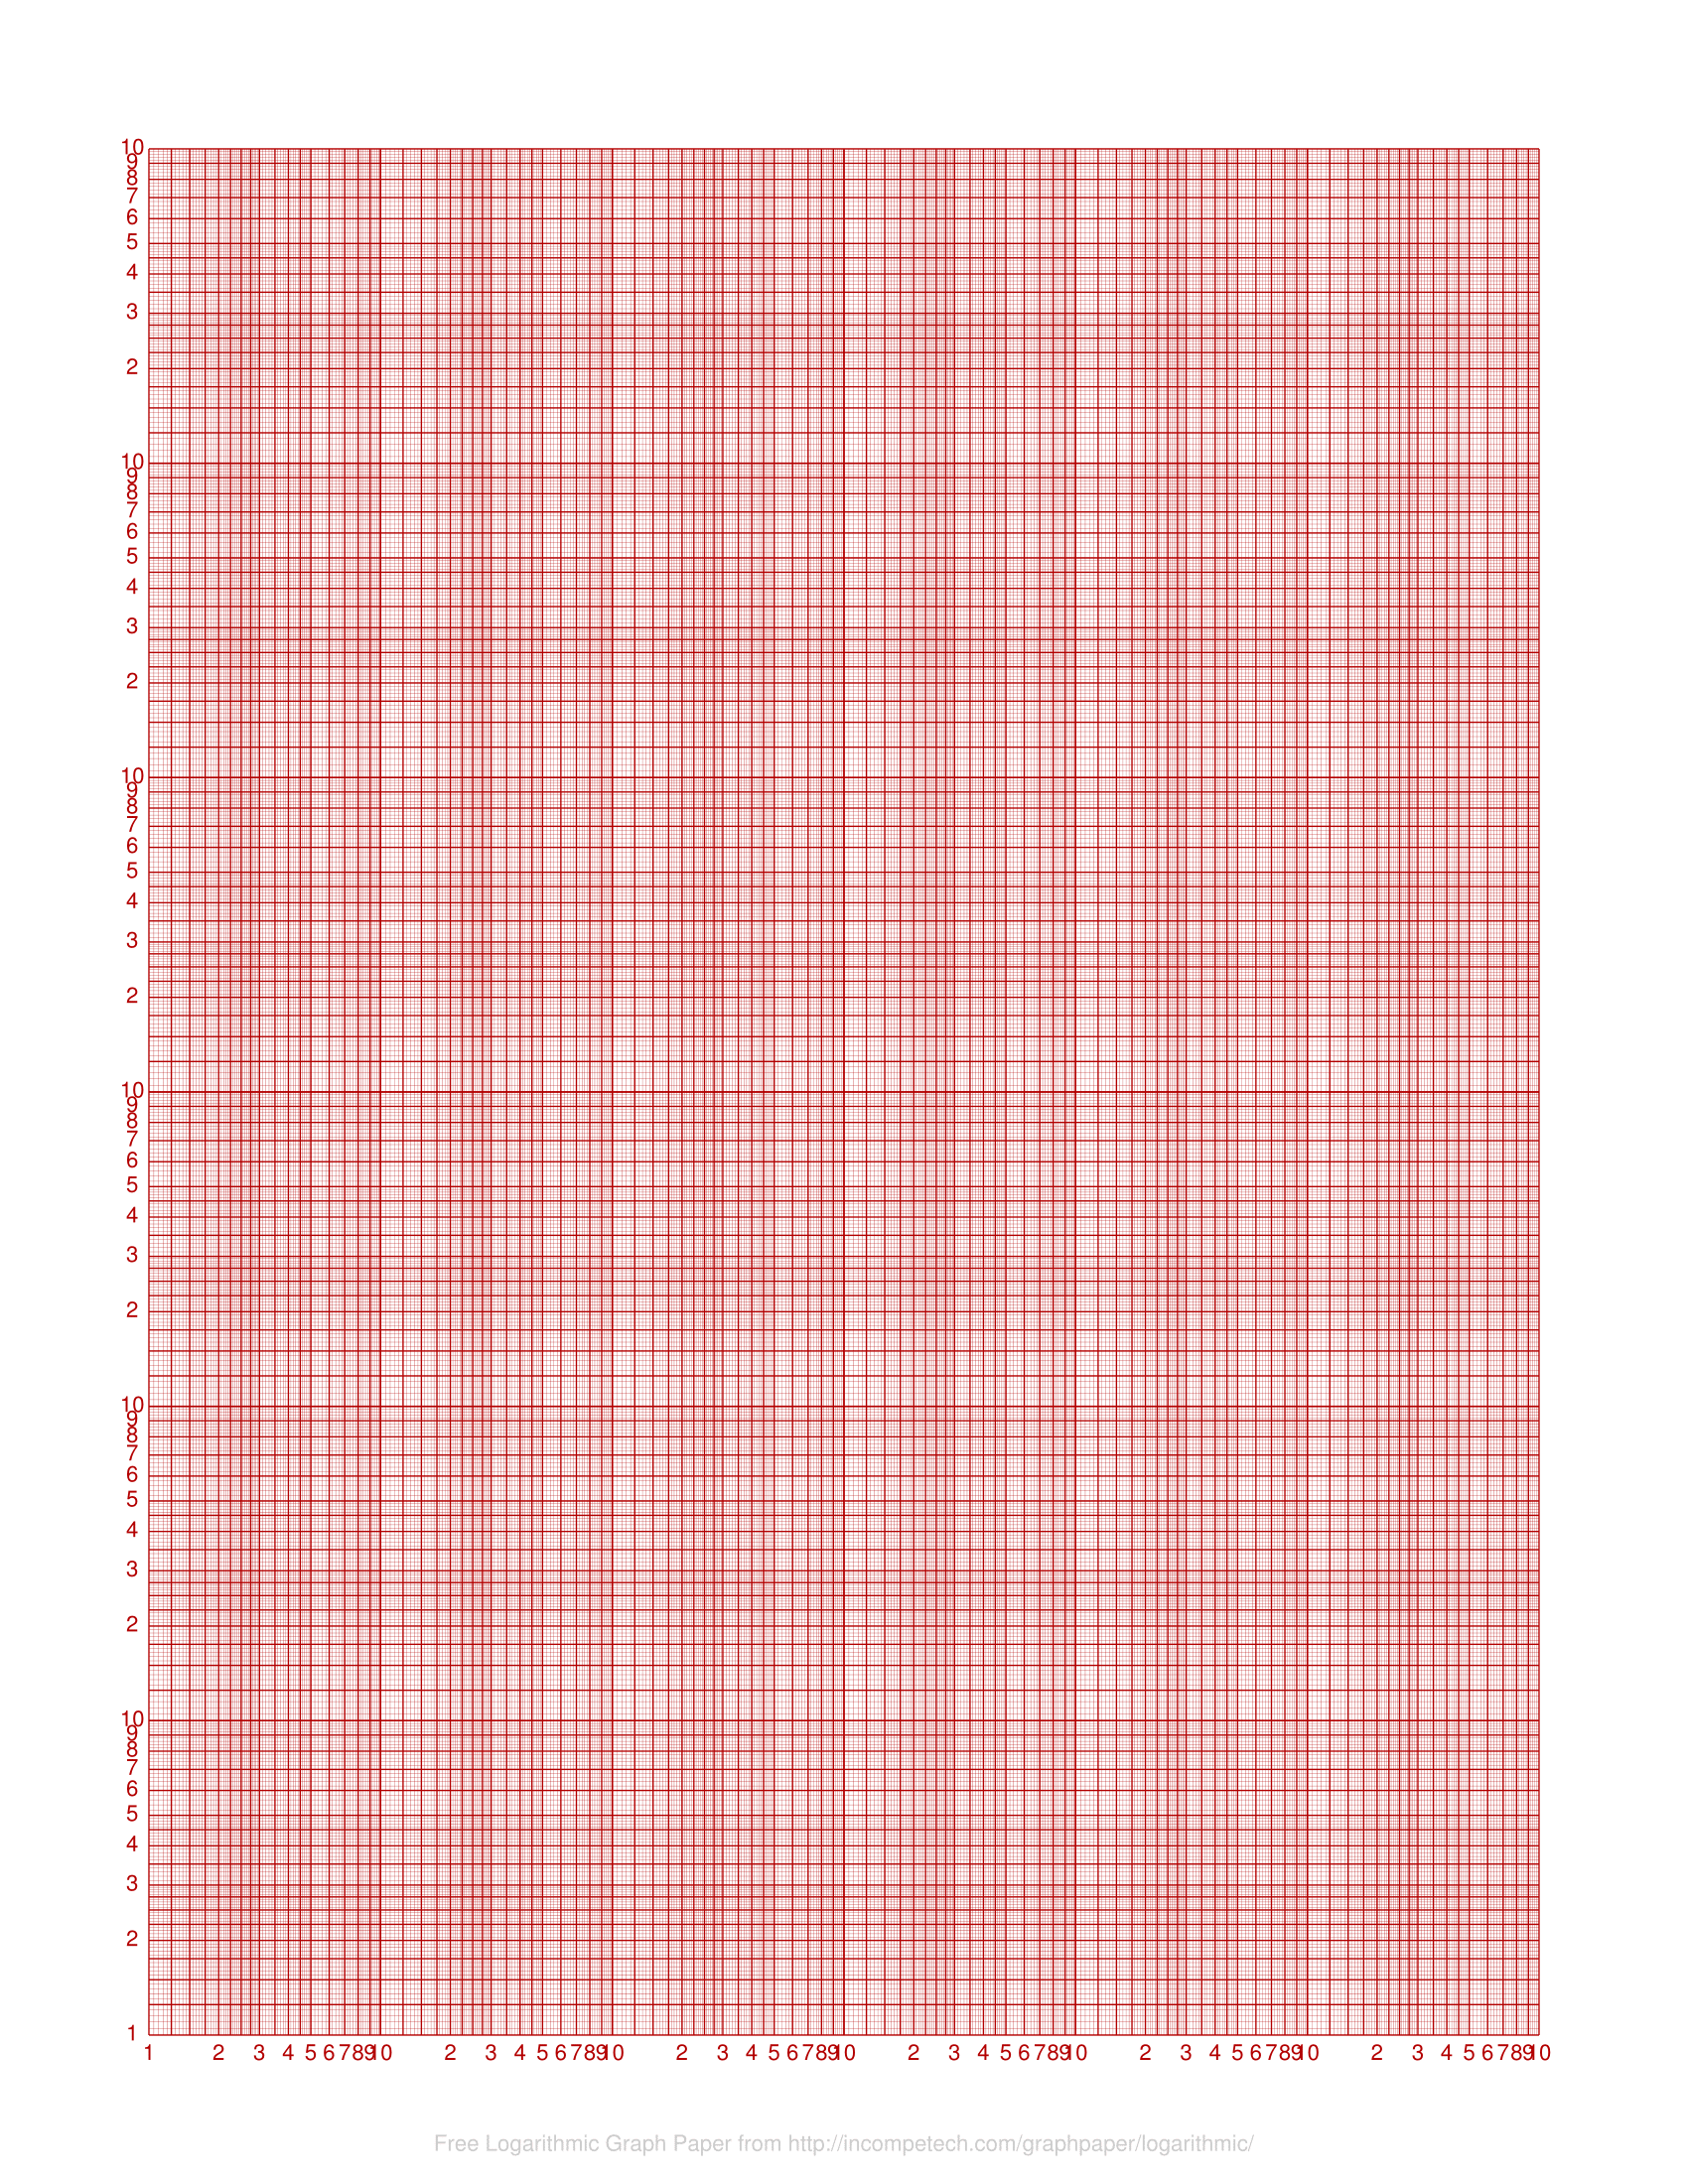 logarithmic graph paper